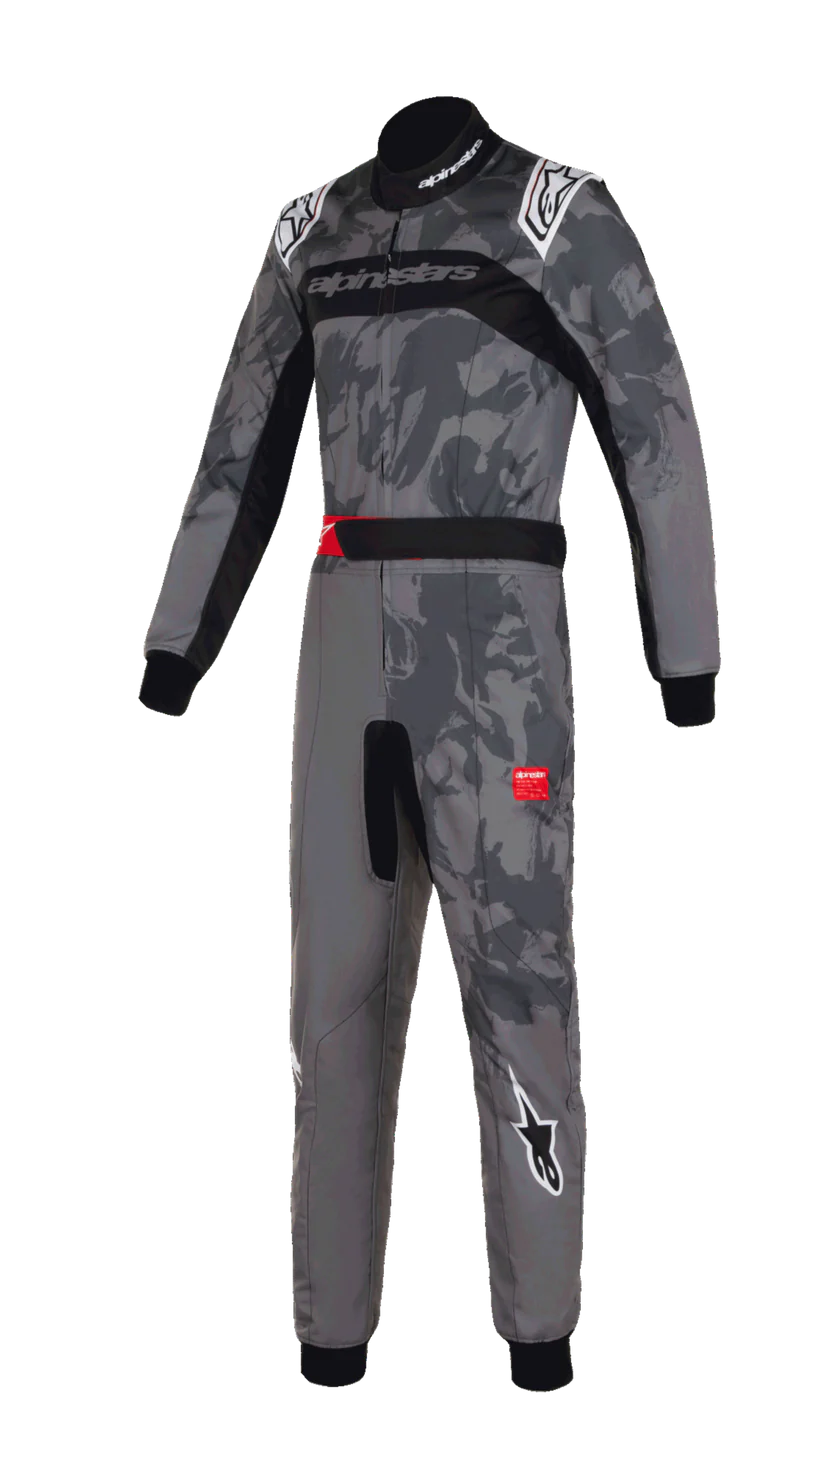 AlpineStars KMX-9 V3 Graphic Adult Suit